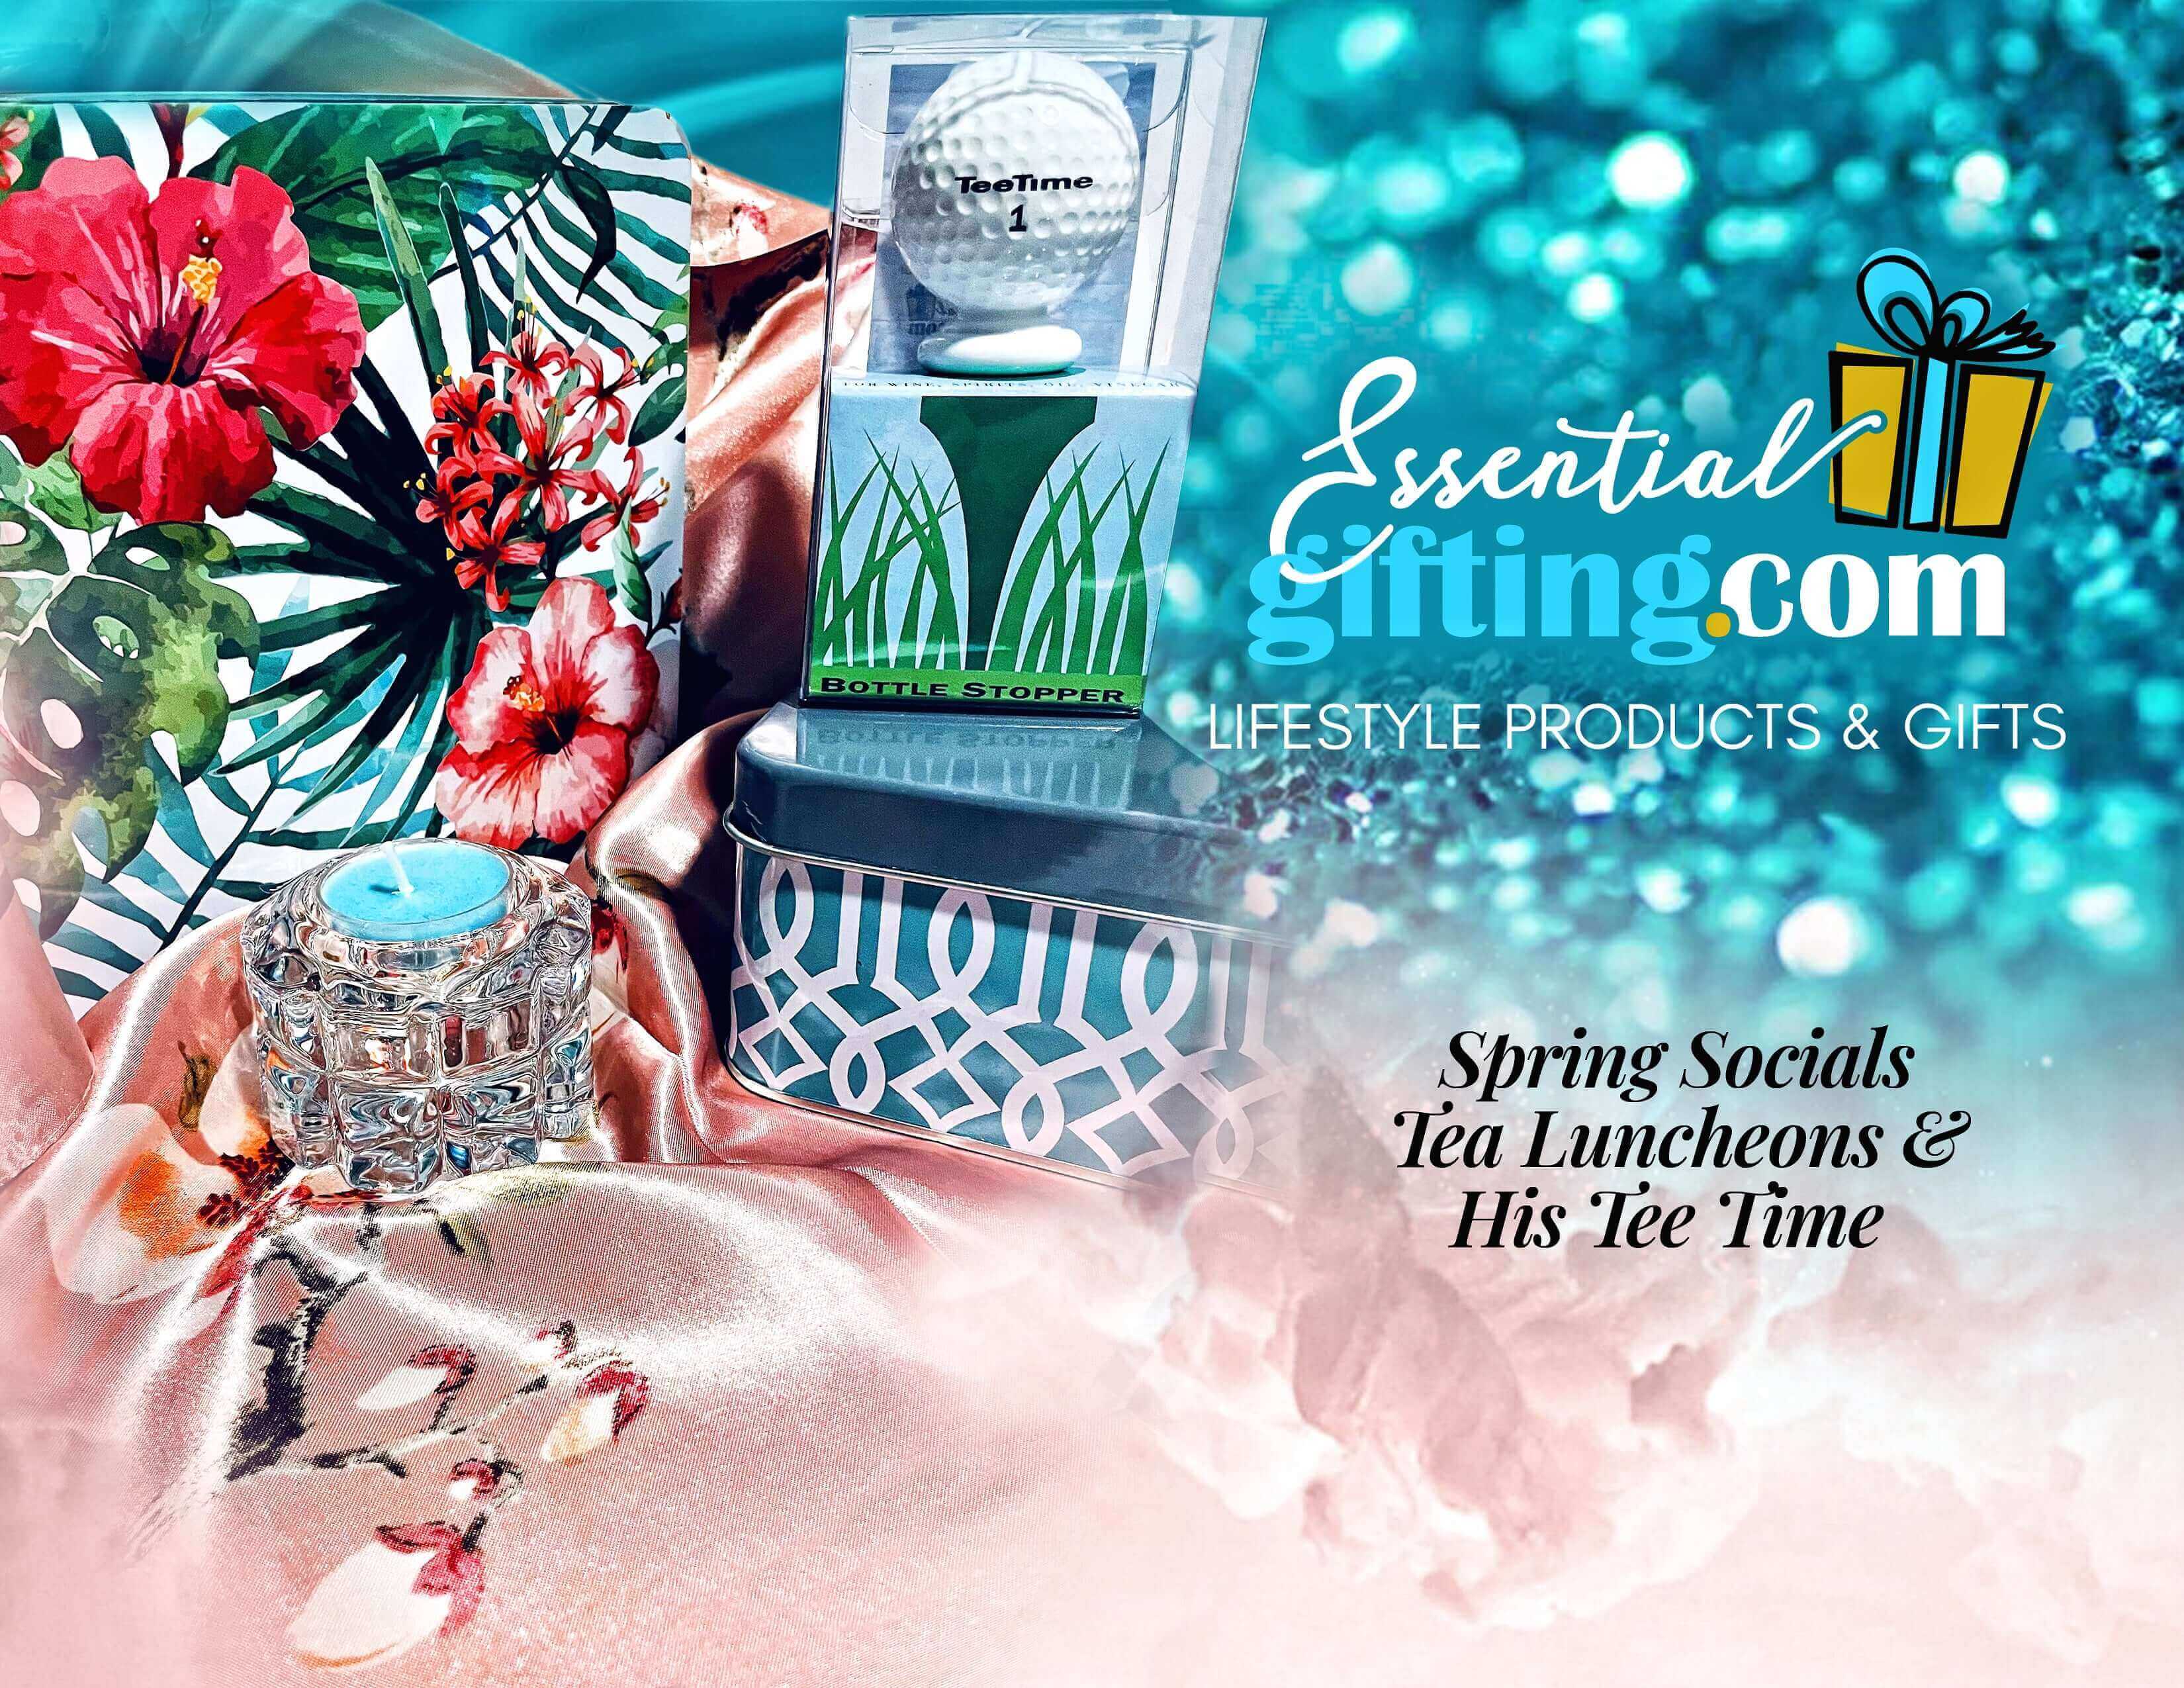 Blog: Gift Guide: Spring Socials, Essentialgifting